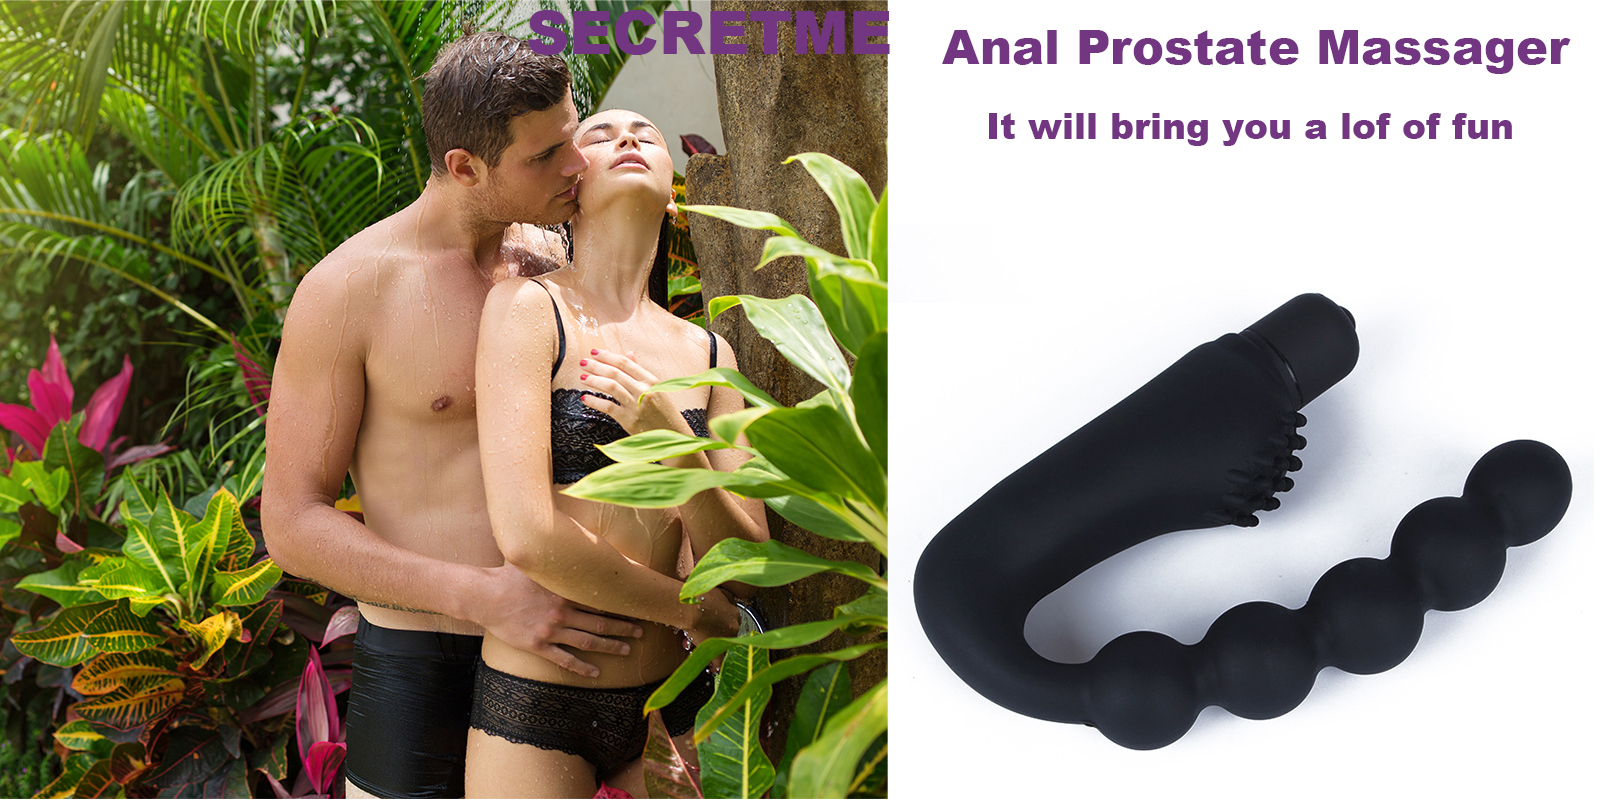 Anal Prostate Massager